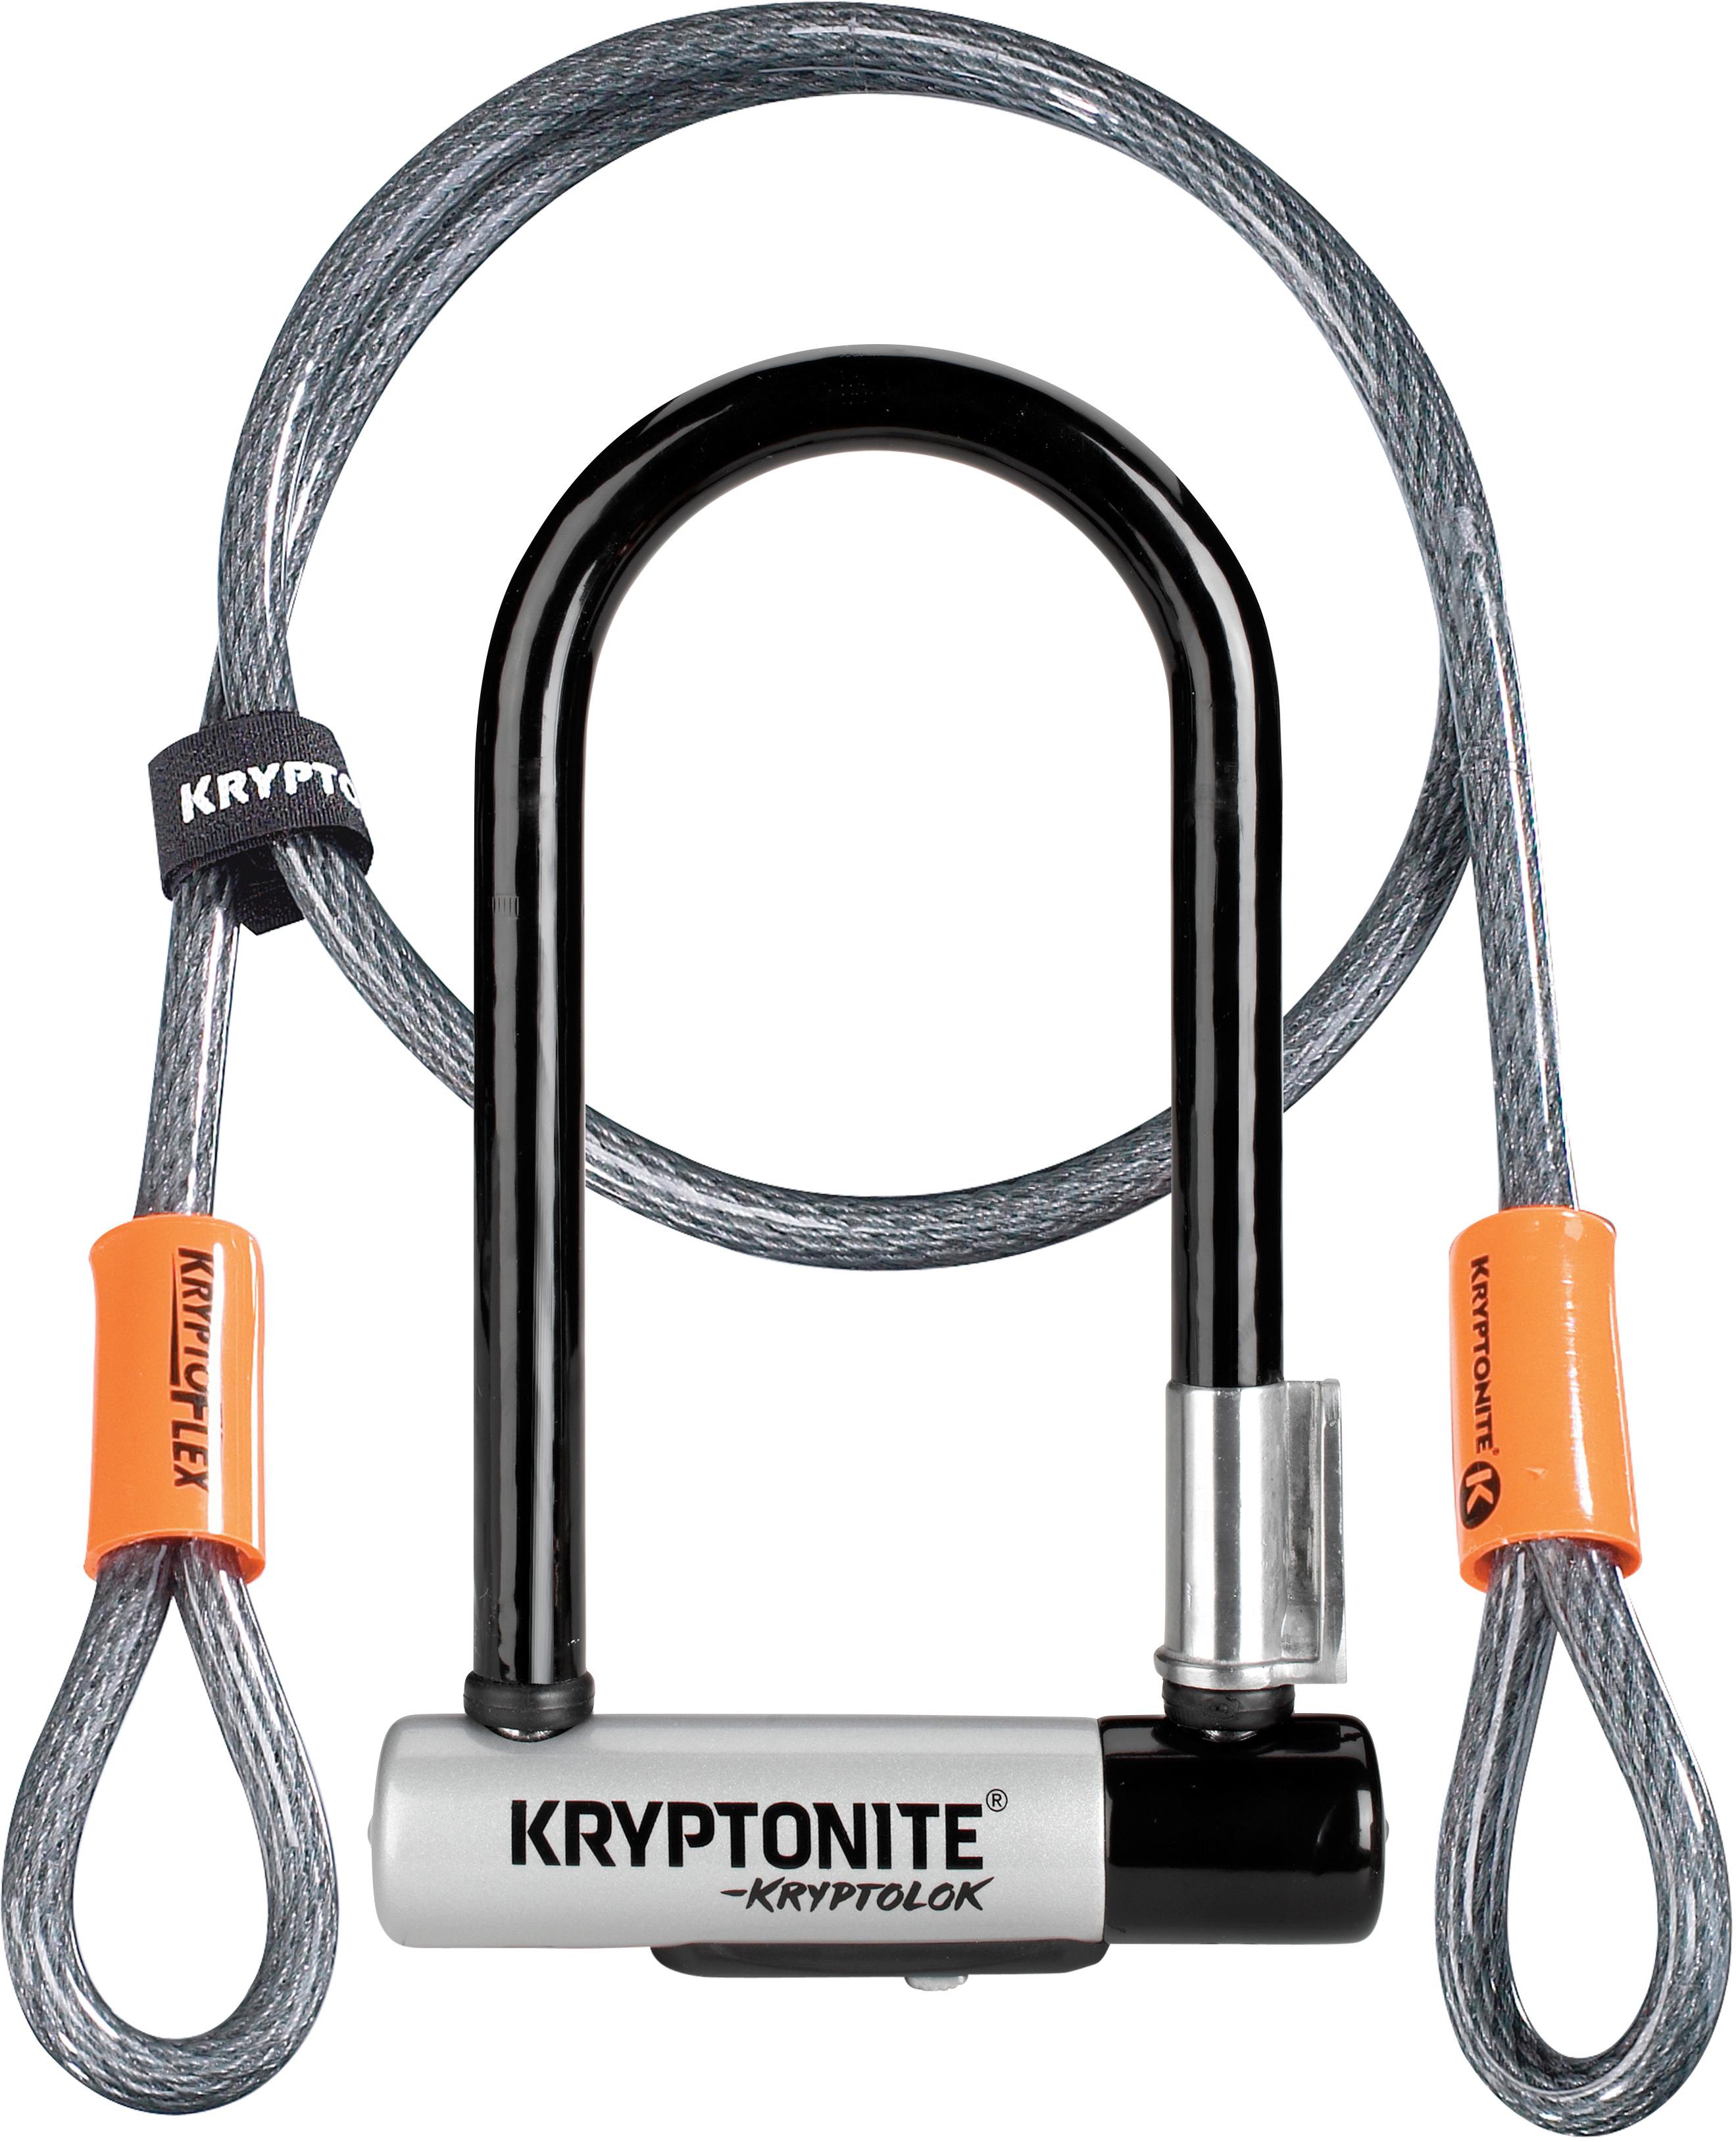 Kryptonite Mini 7 Bike Lock And Kryptoflex Cable - Black/silver